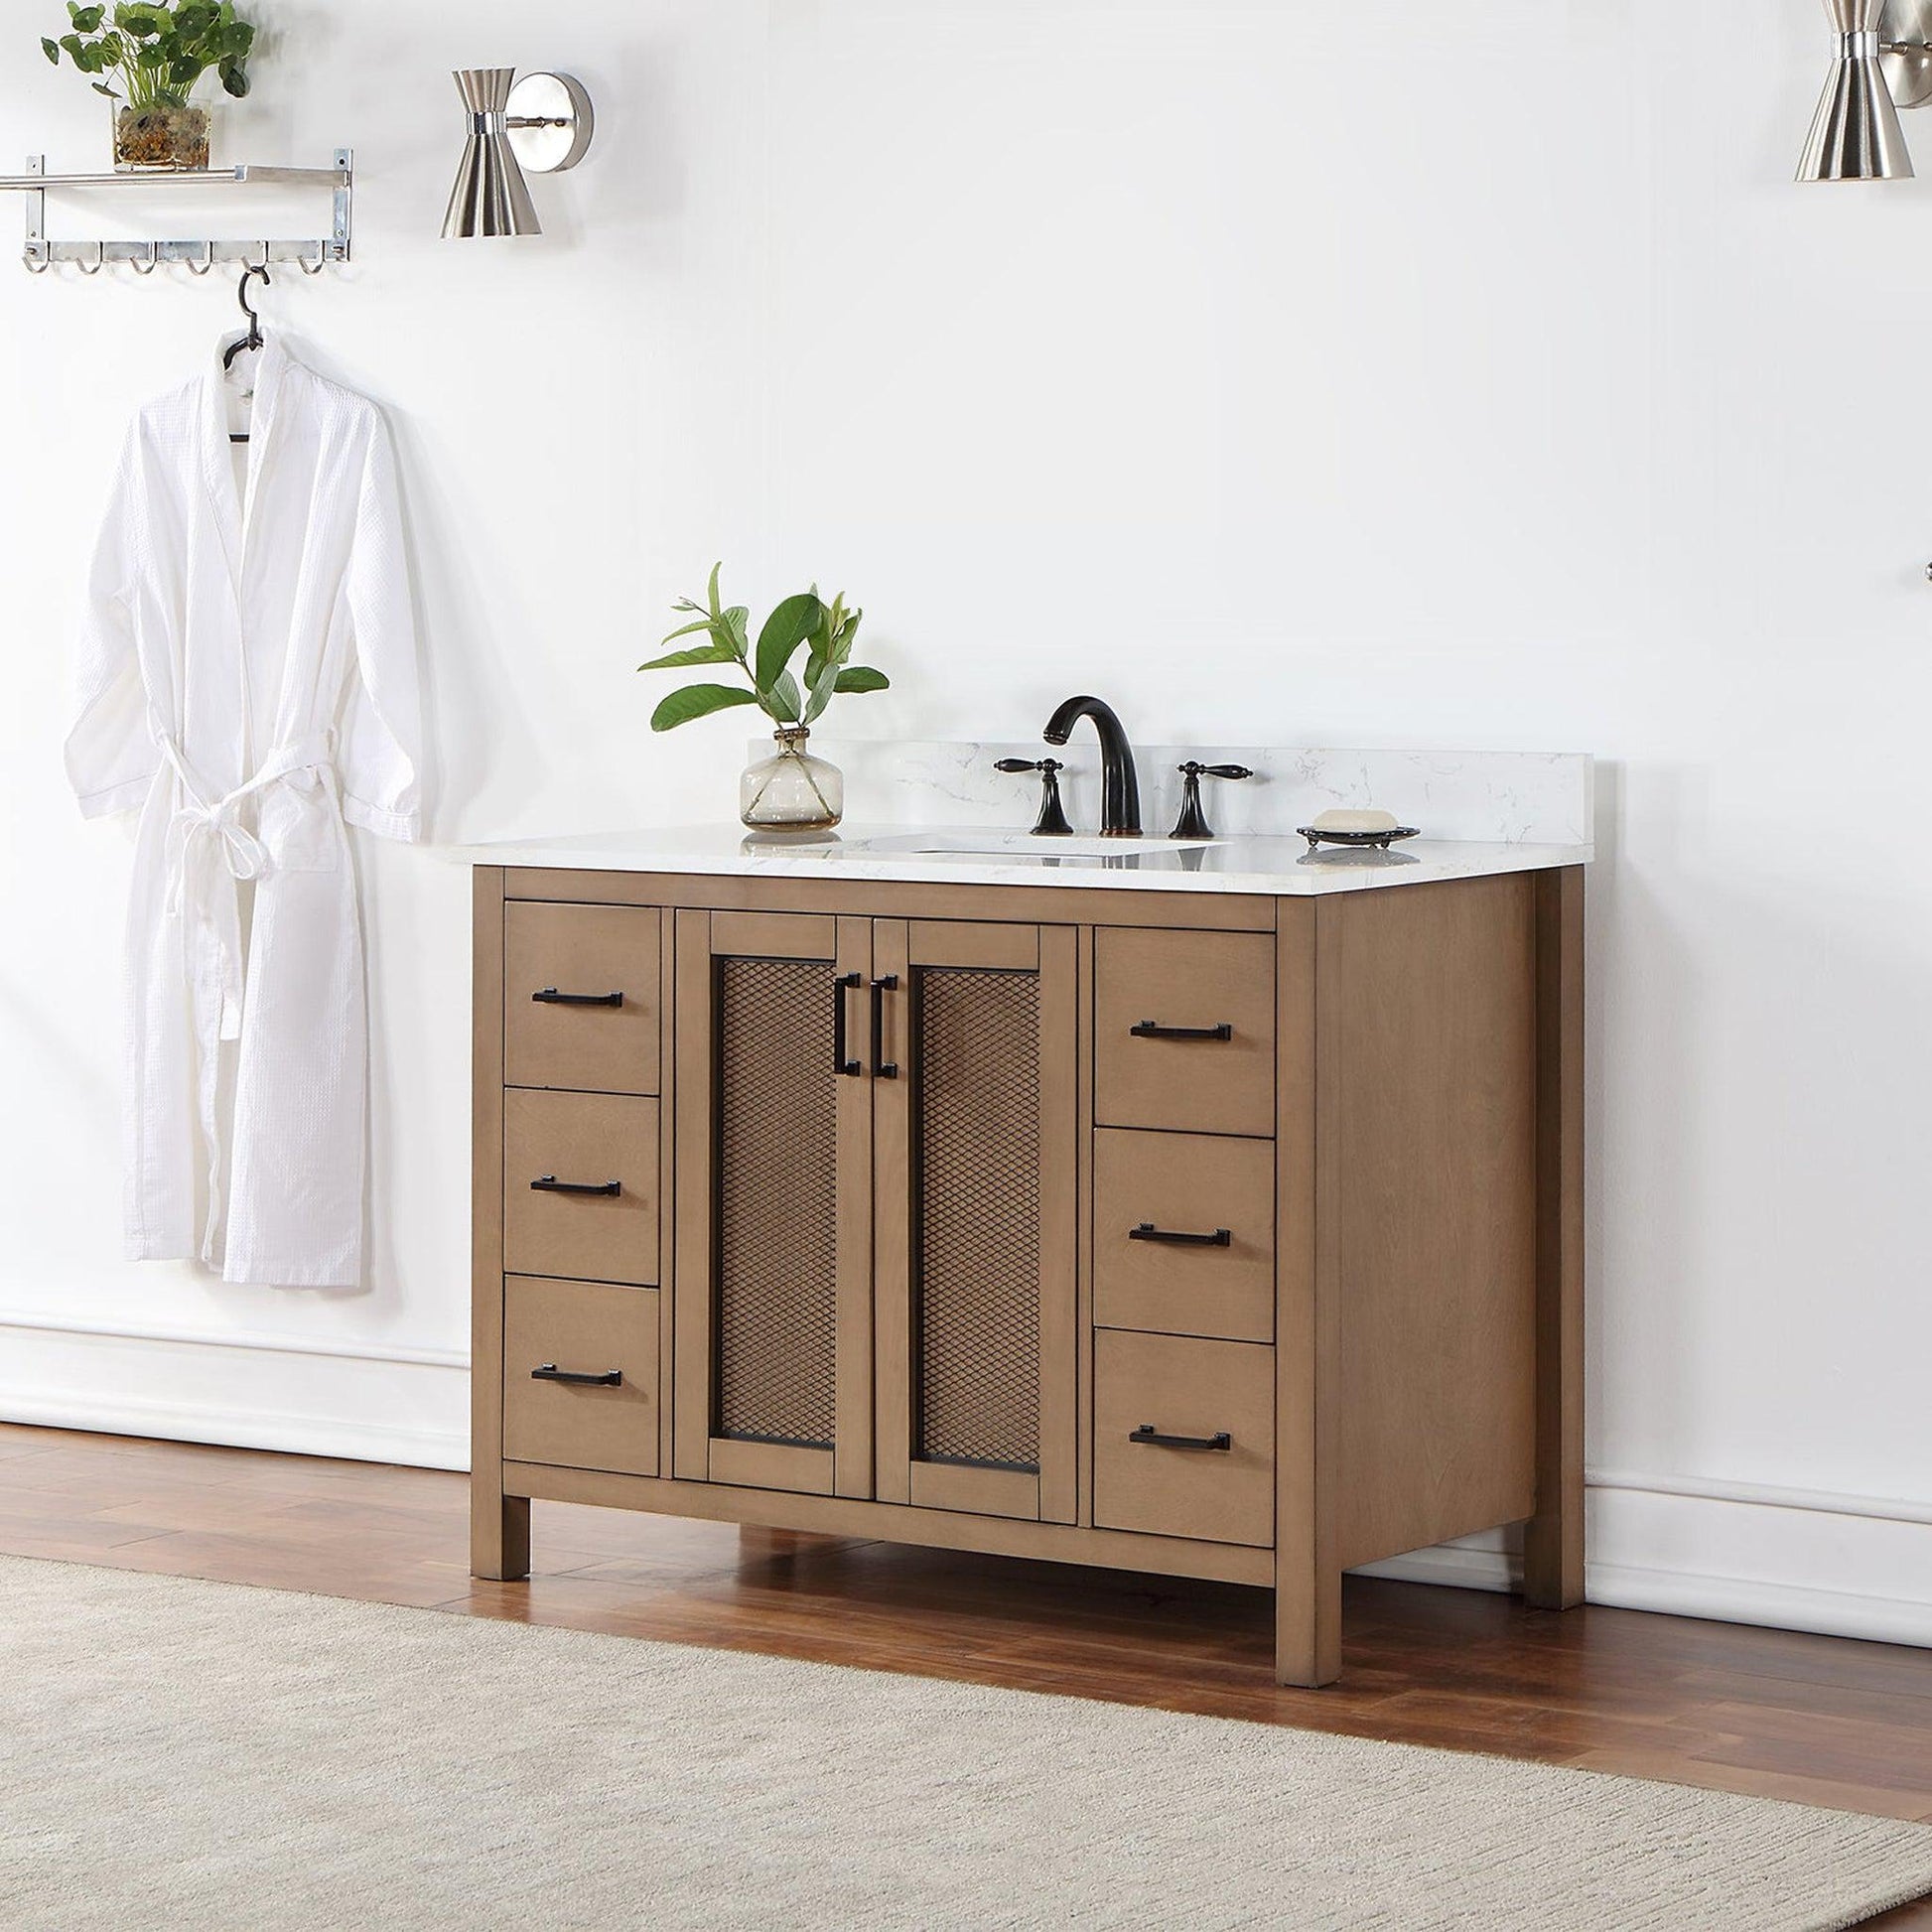 Altair Hadiya 48" Single Brown Pine Freestanding Bathroom Vanity Set With Elegant Aosta White Composite Stone Top, Rectangular Undermount Ceramic Sink, Overflow, and Backsplash